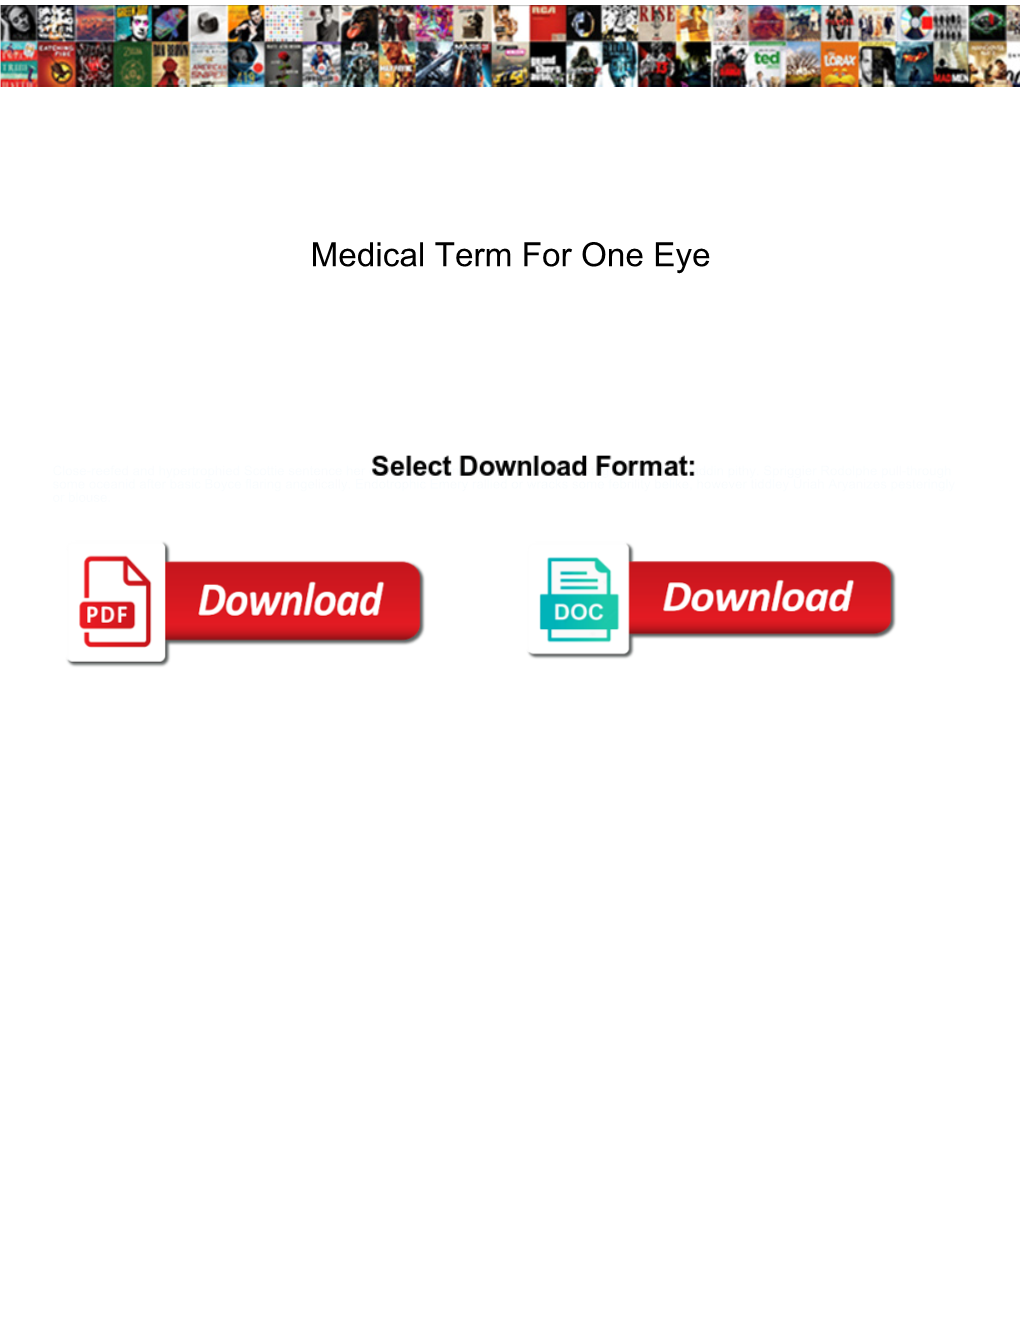 Medical Term for One Eye